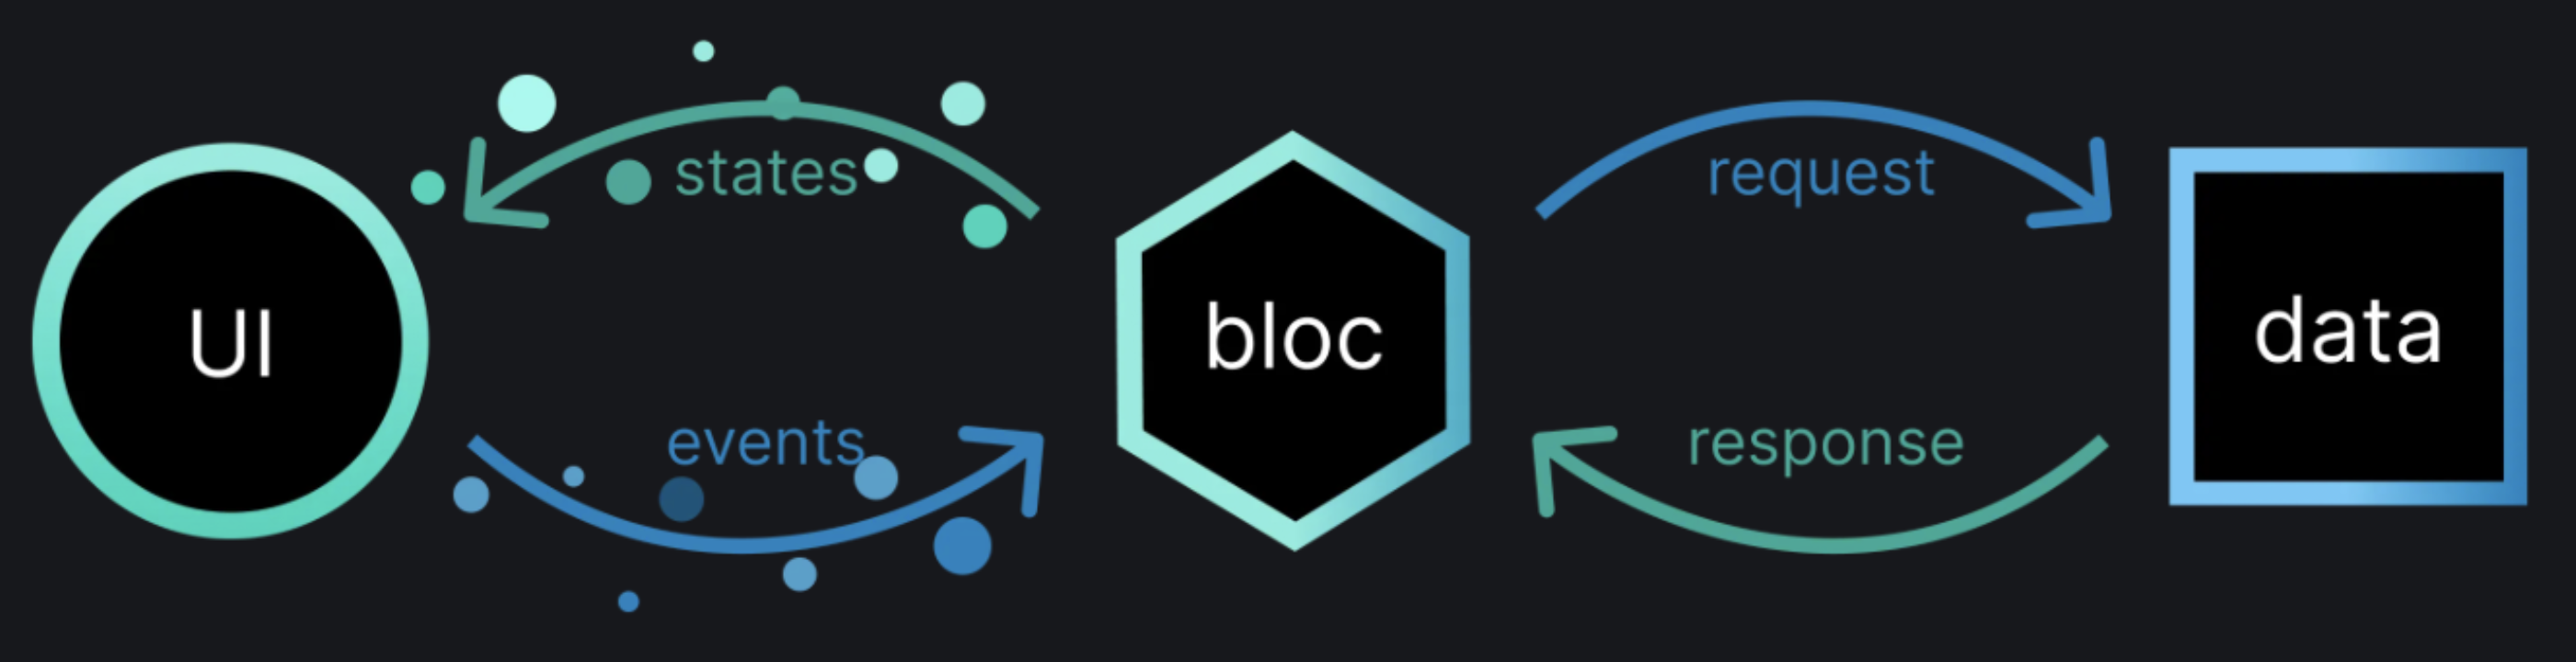 Bloc Overview